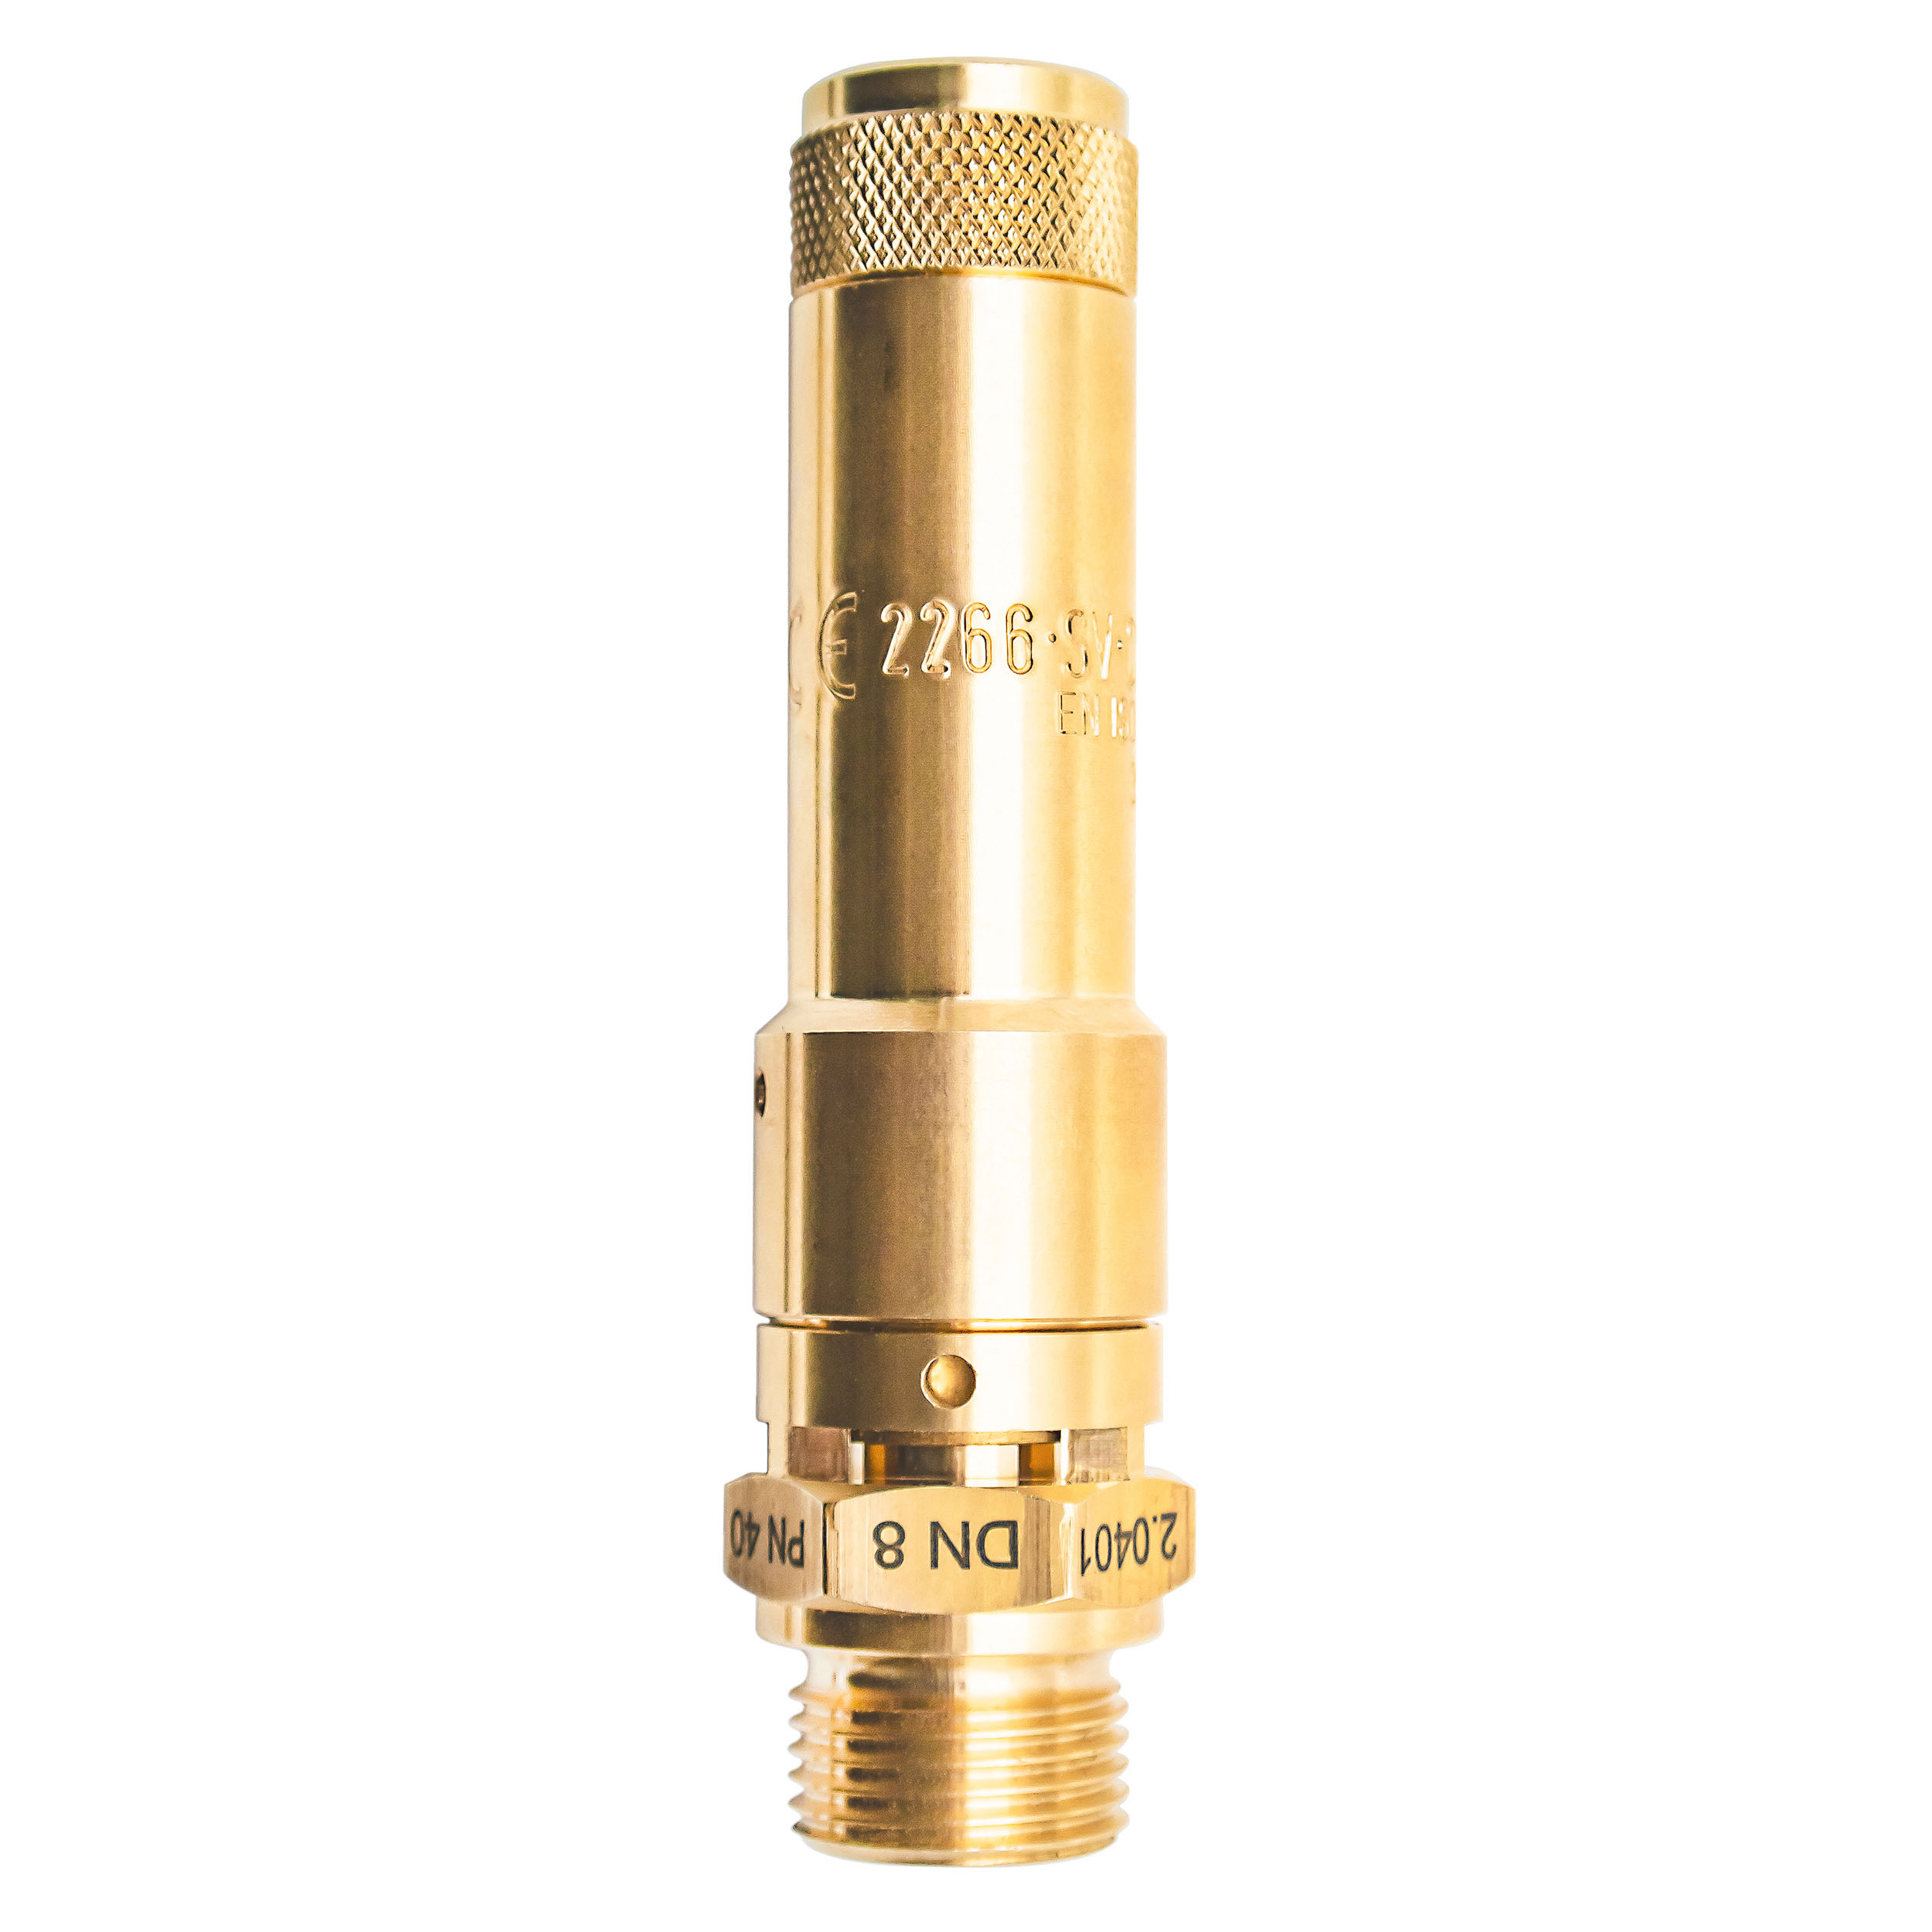 Savety valve component tested DN 8, G⅜, set pressure: 1.4 bar (20,3 psi)